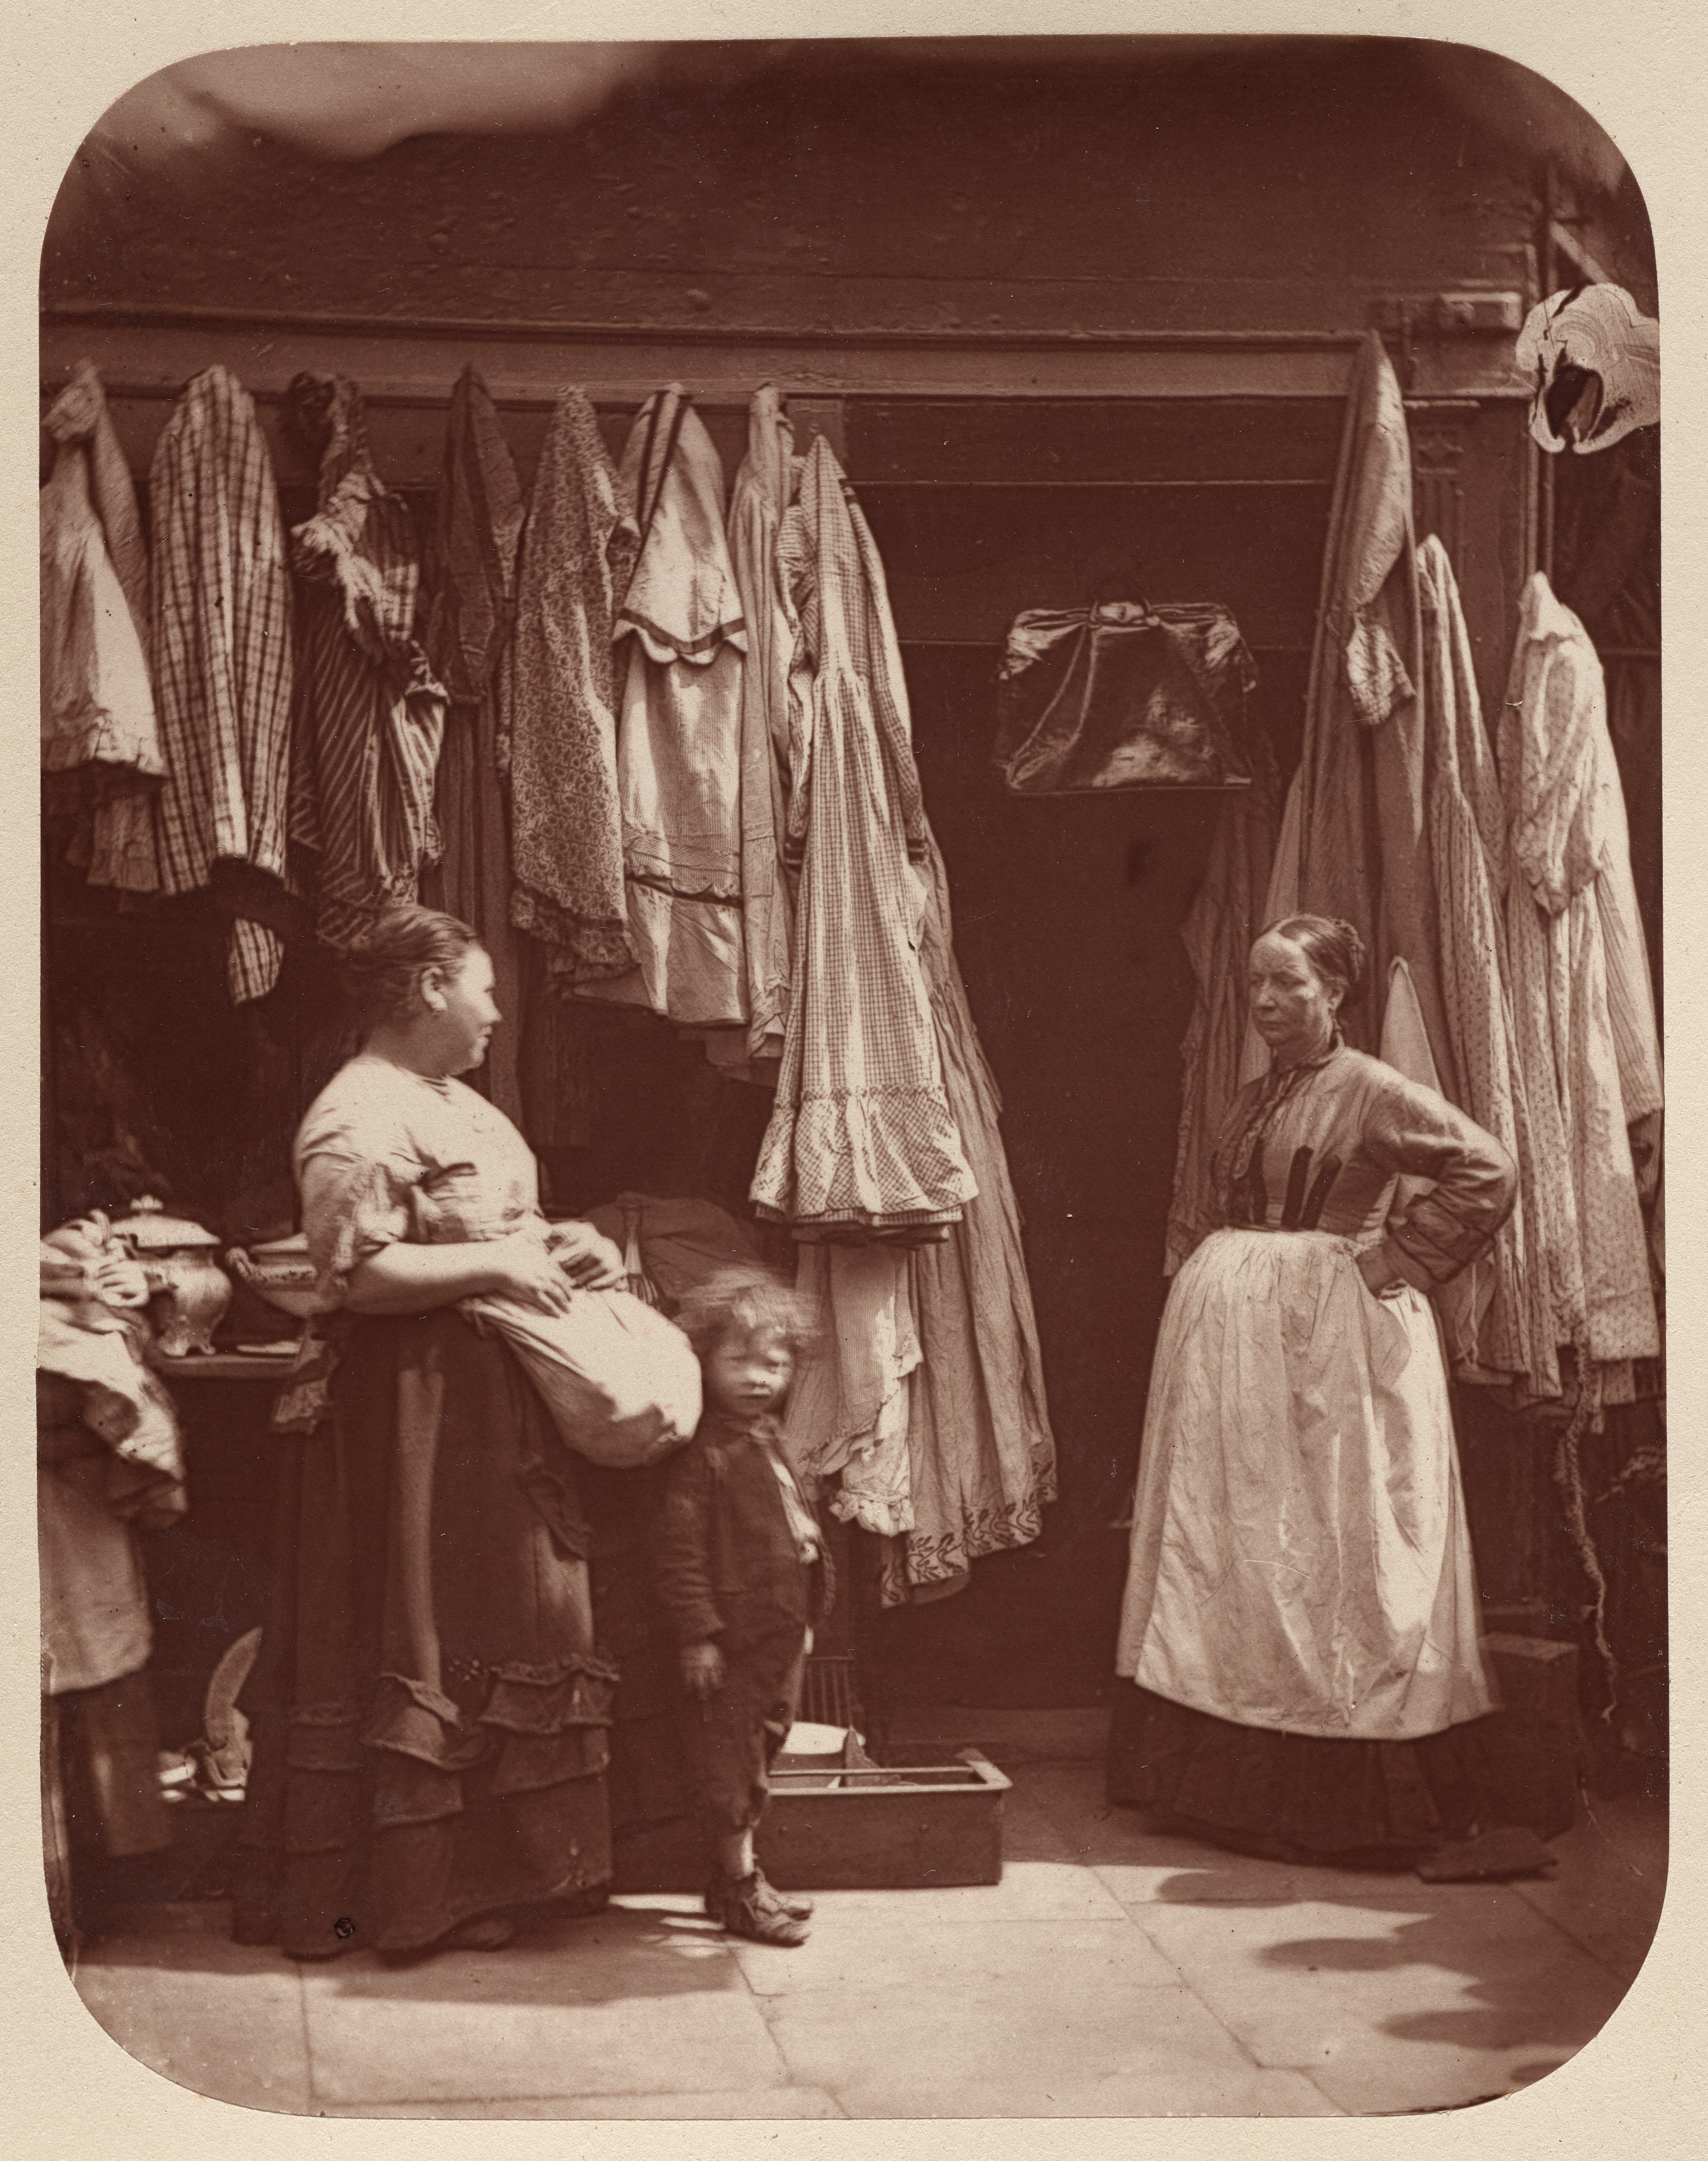 An Old Clothes Shop, Seven Dials